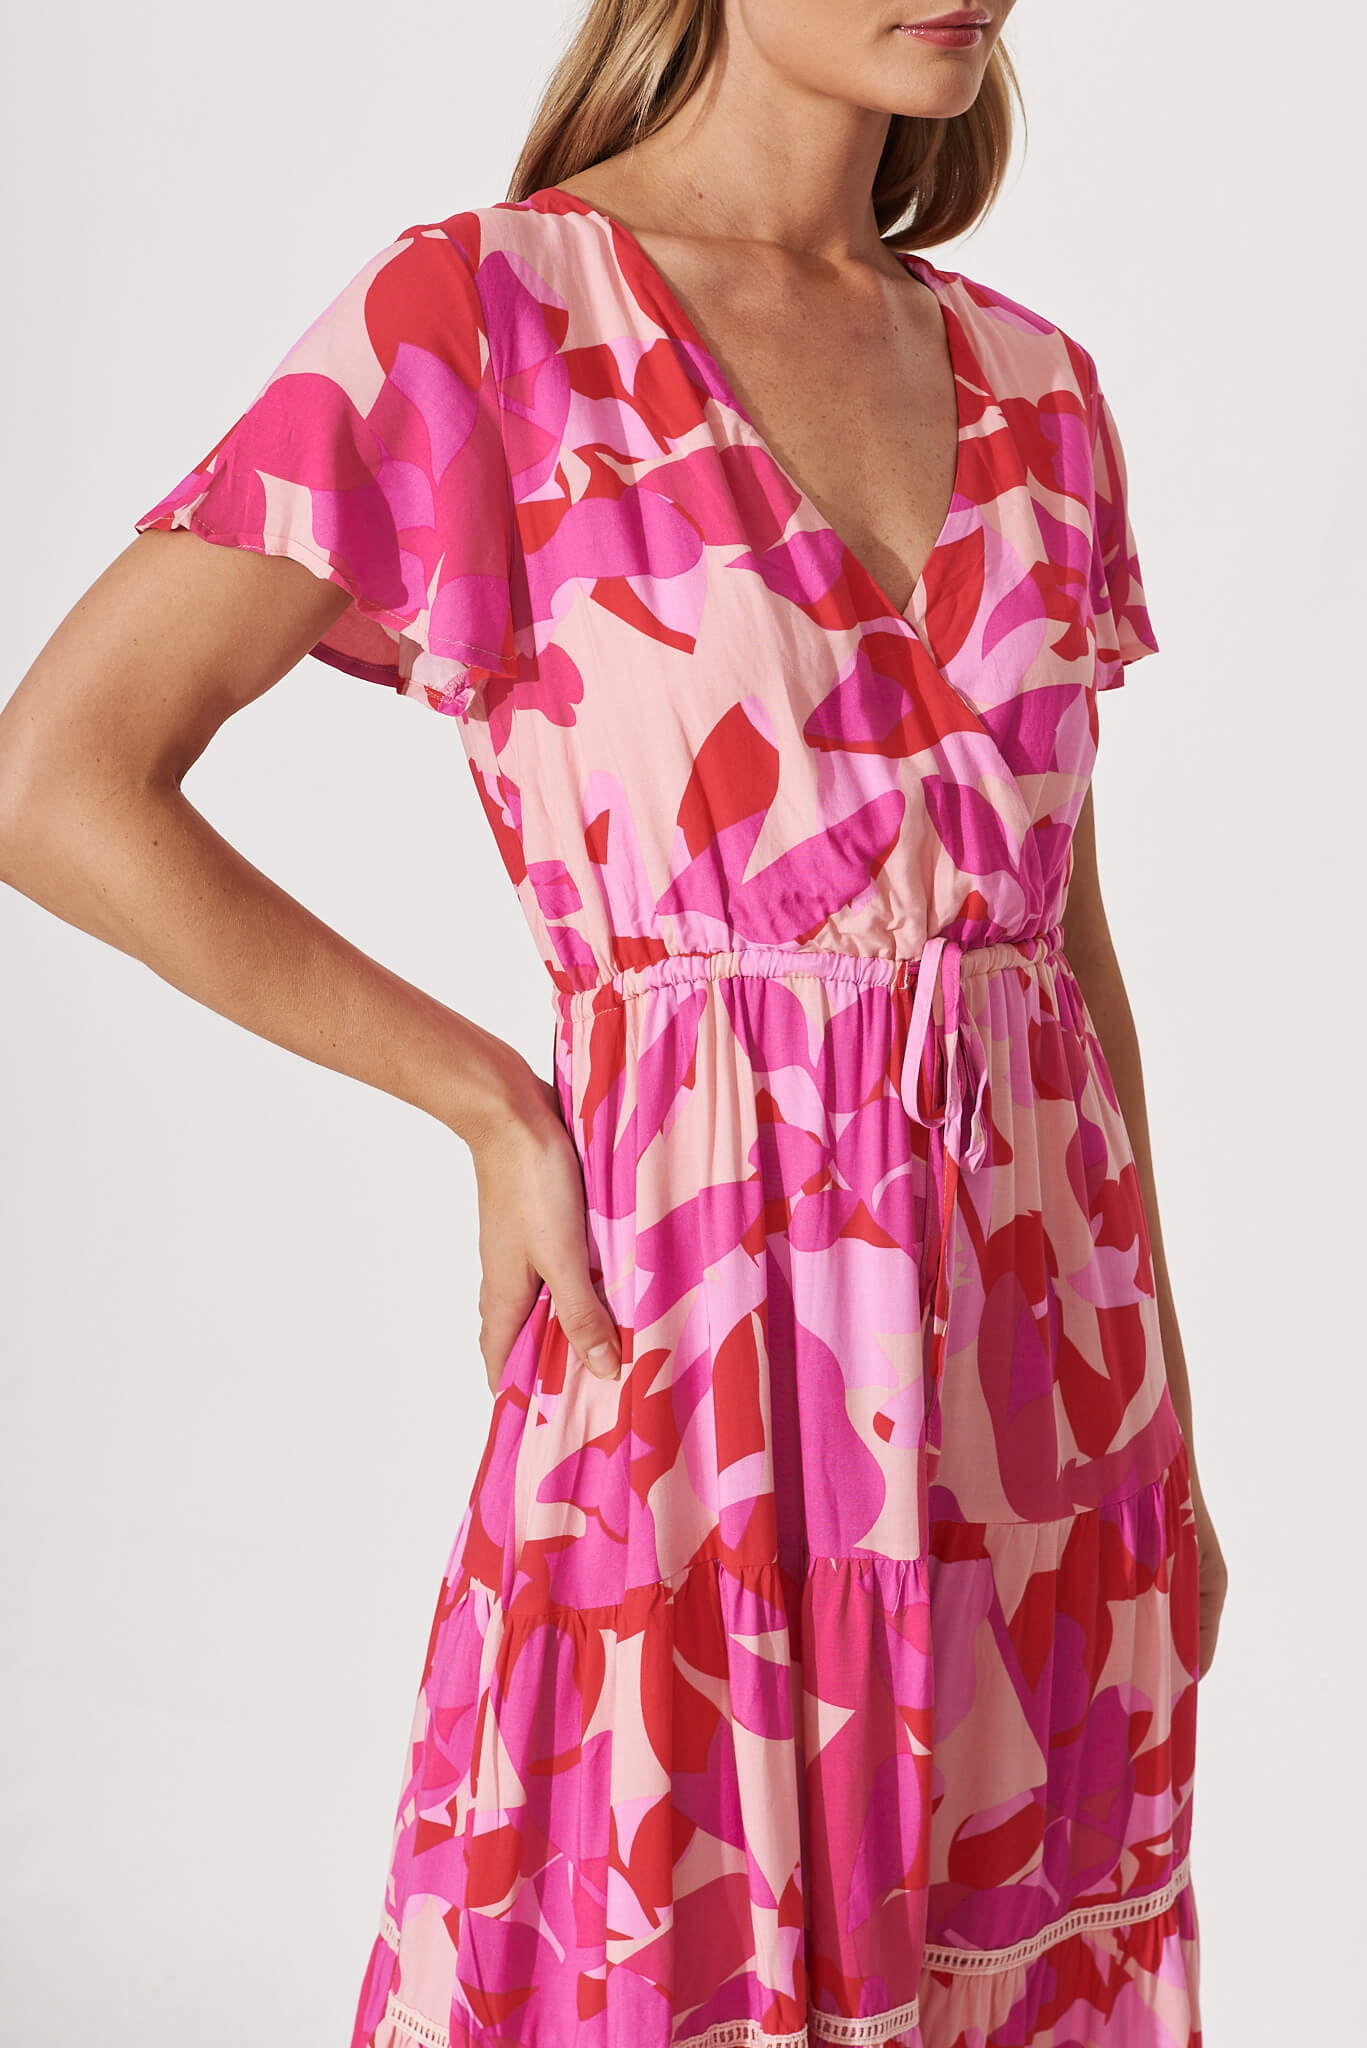 Aquarius Midi Dress In Pink Multi Leaf Print – St Frock